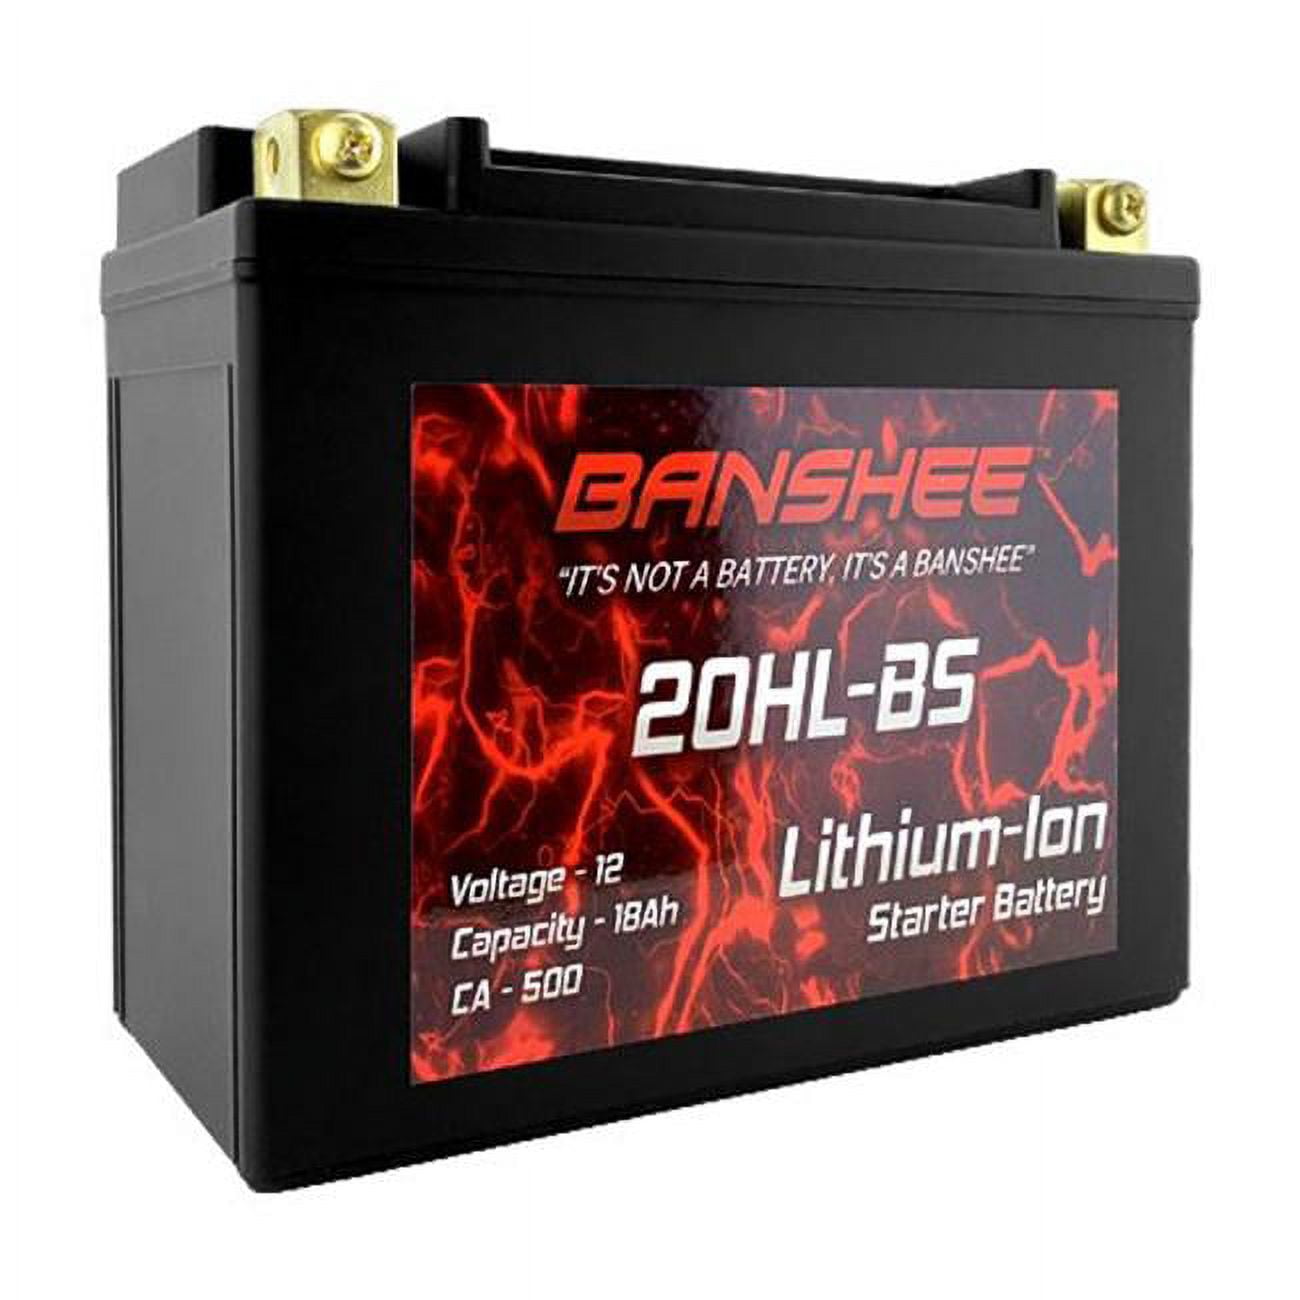 Picture of Banshee DLFP20HL-BS-05 12.8V Lithium LiFePO4 20HL-BS Sealed Motorcycle Starter Battery